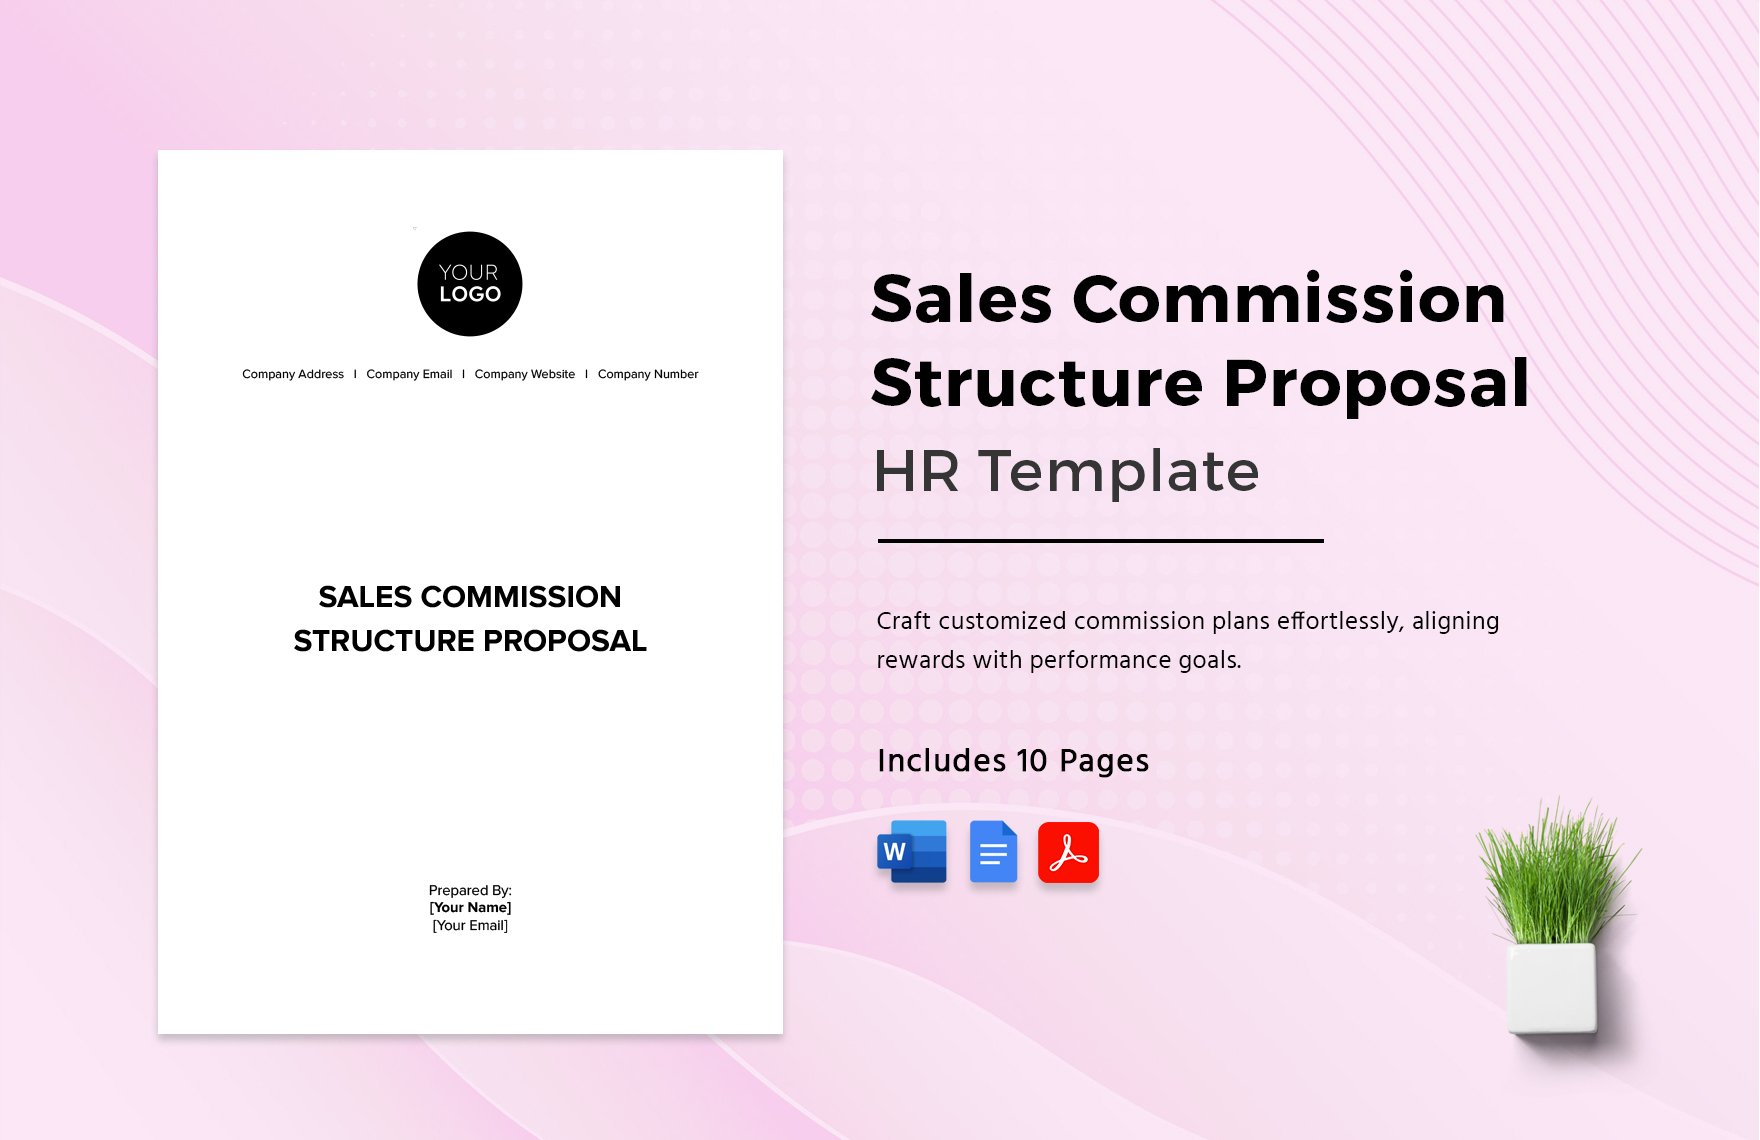 Sales Commission Structure Proposal HR Template